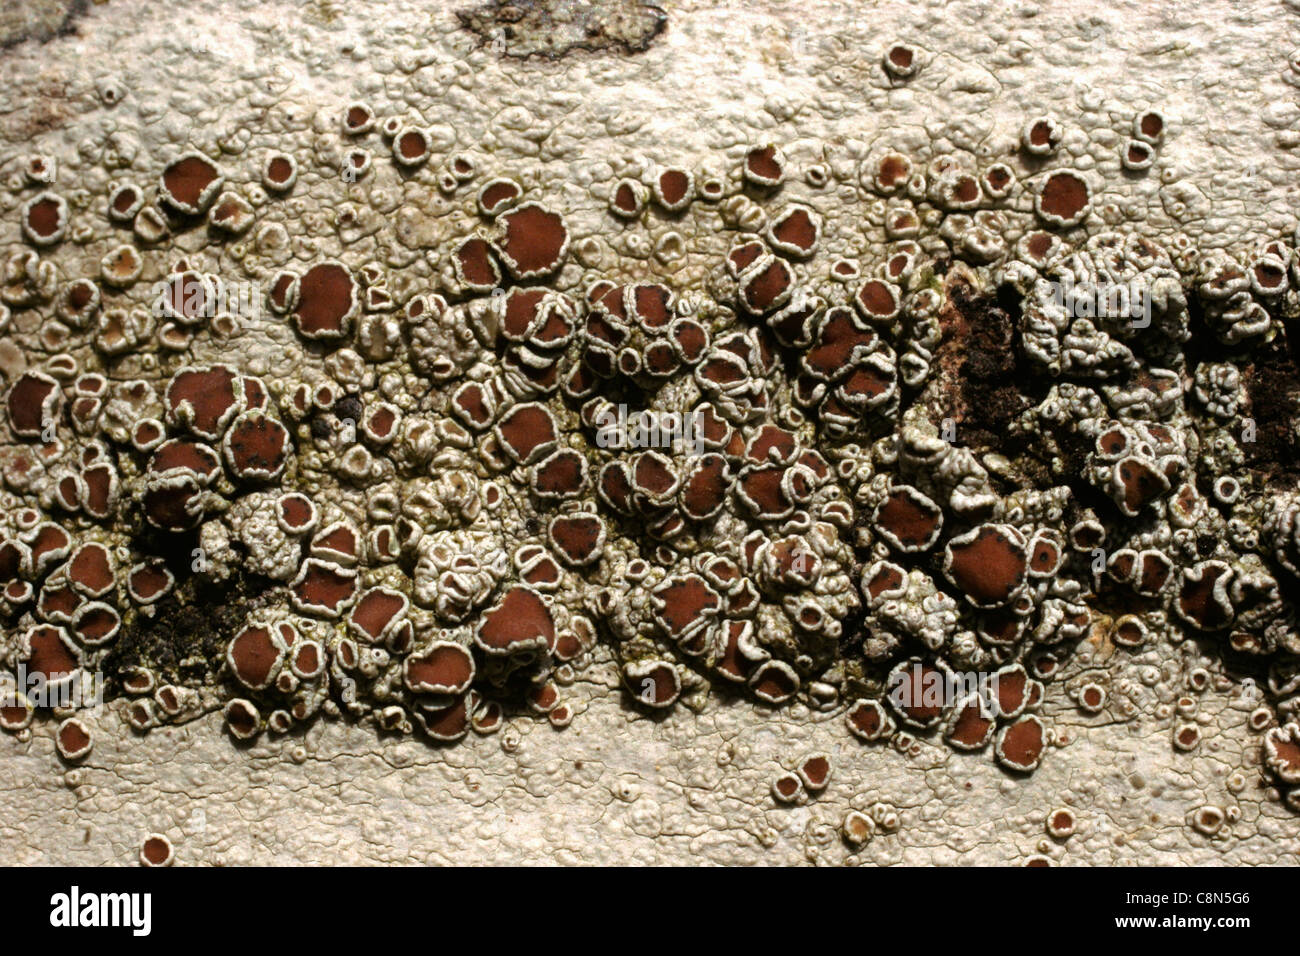 Lichen (Lecanora chlarotera) with apothecia on smooth bark, UK. Stock Photo